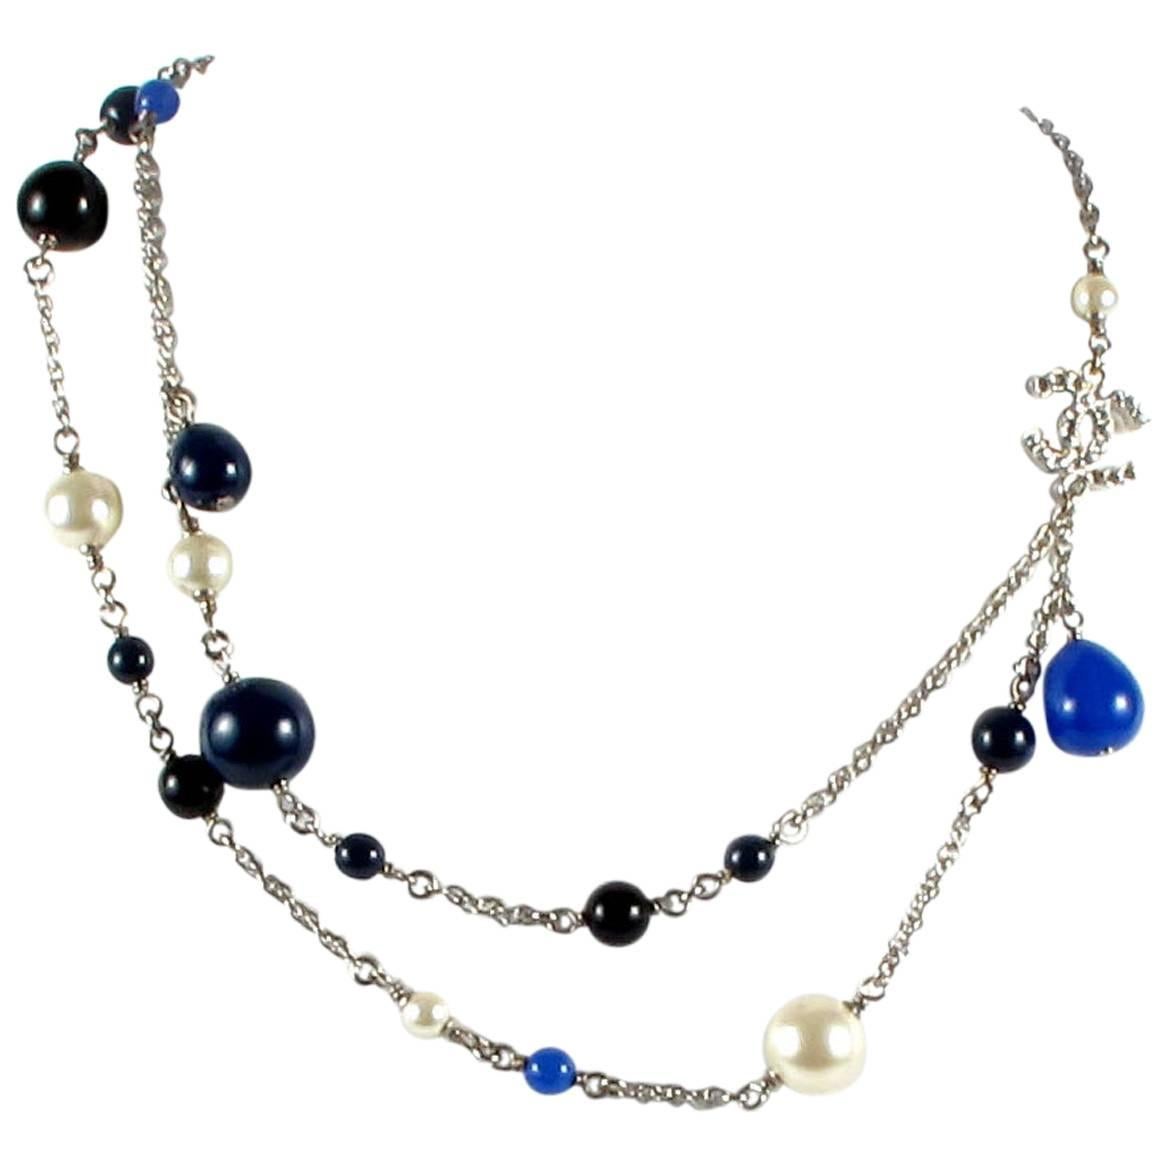 Chanel Pearl Necklace - Crystal CC Logo Blue Black Beads Silver Rhinestone Charm